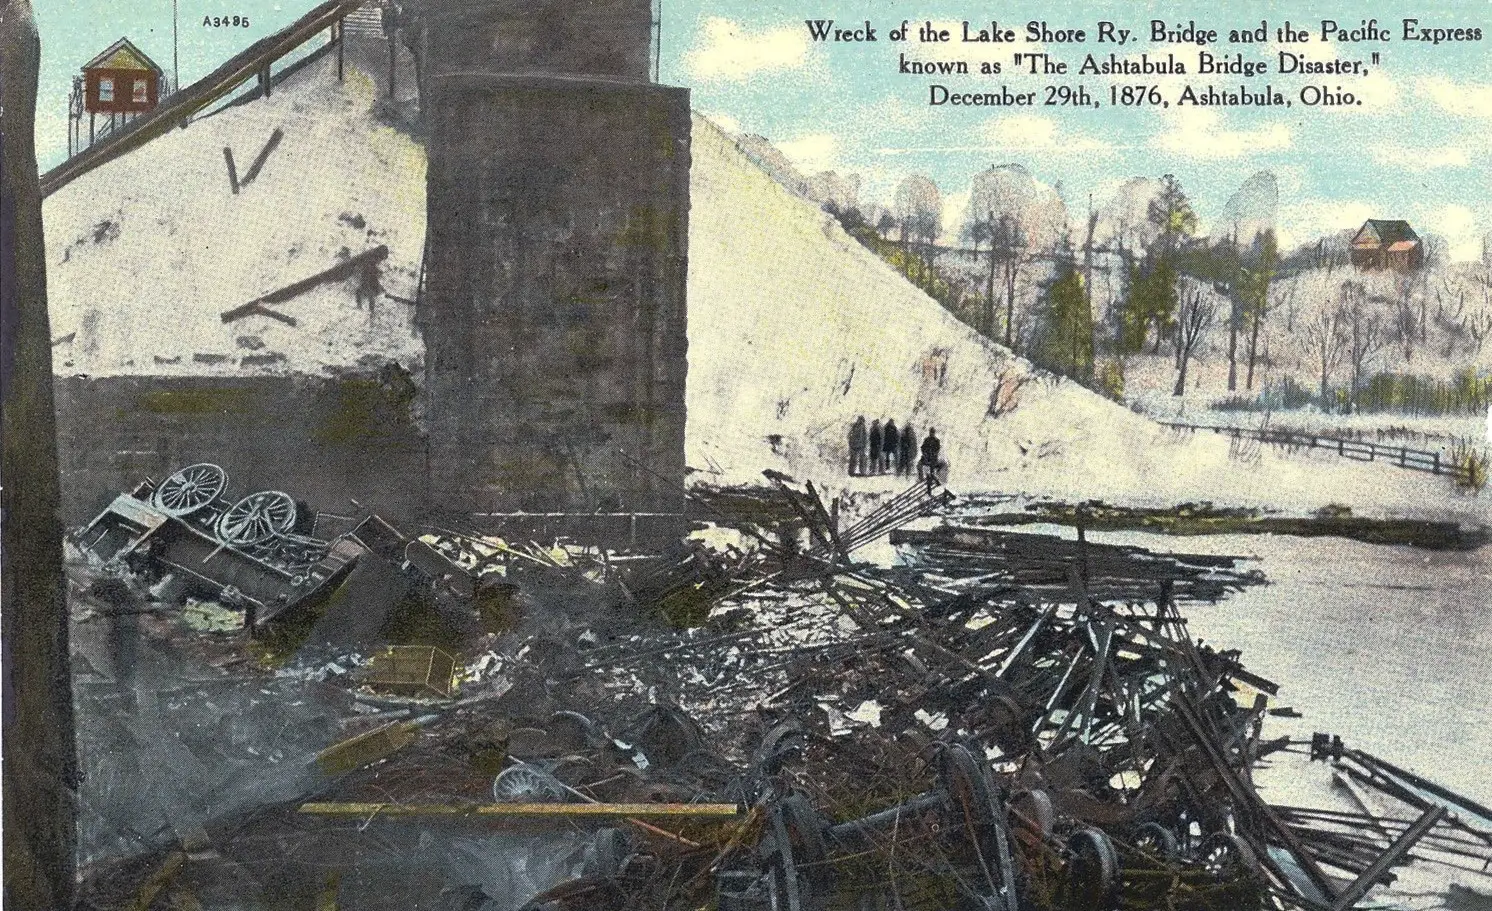 Postcard of the Pacific Express train wreck in the Ashtabula River